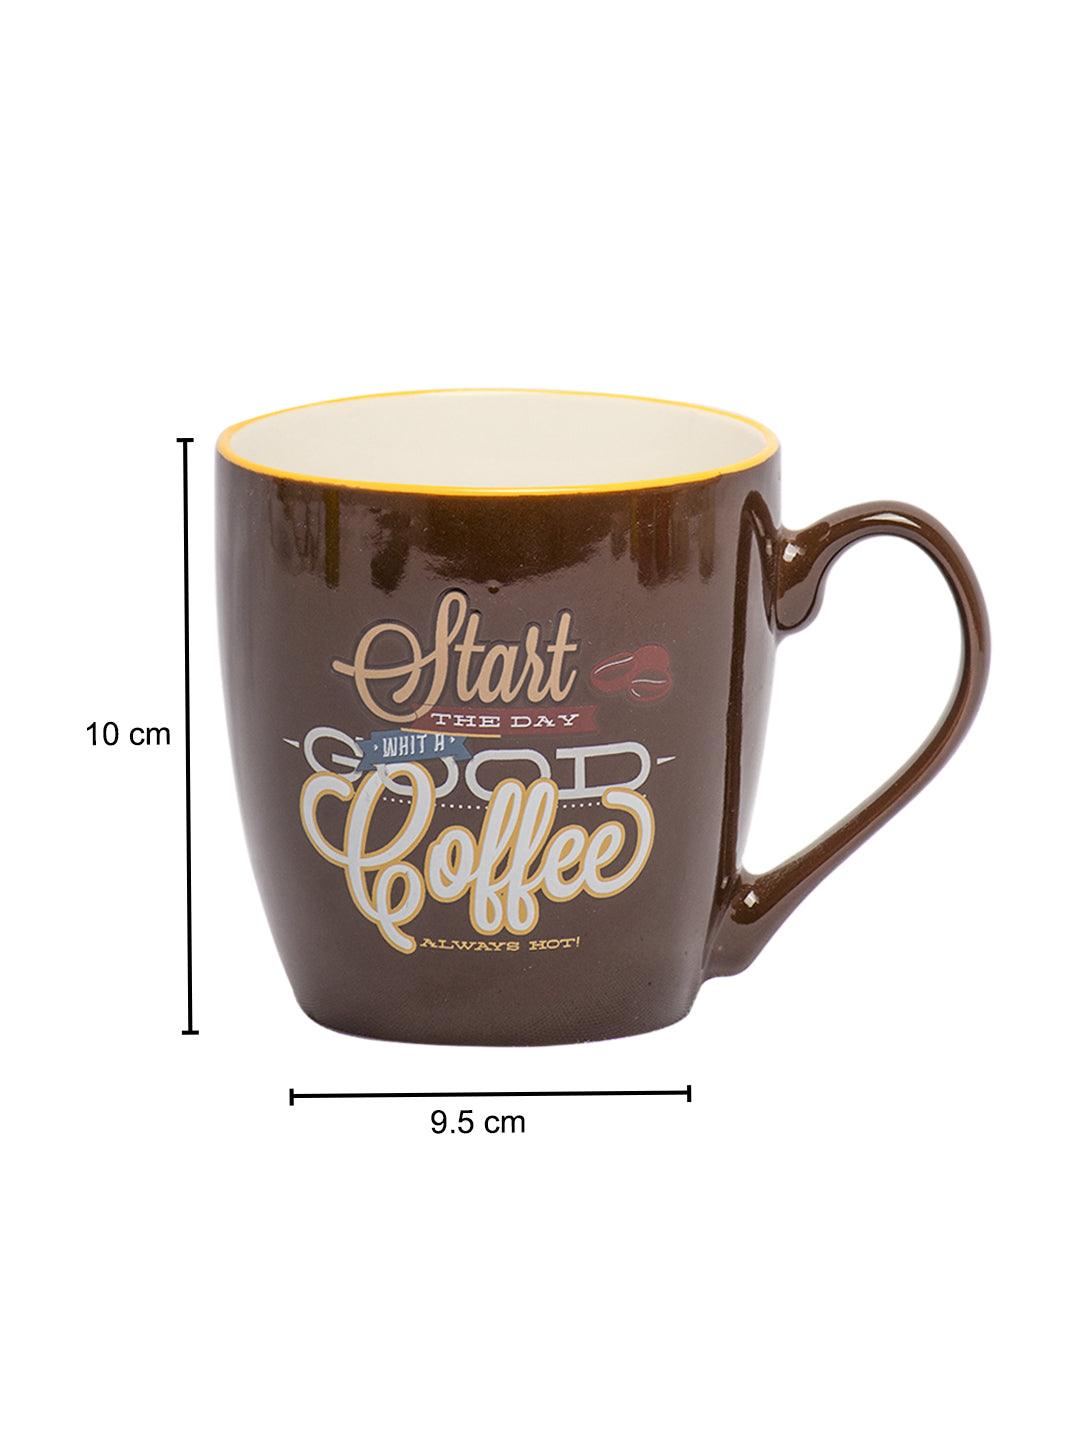 Start Every Day With Good Coffee' Mug - MARKET 99